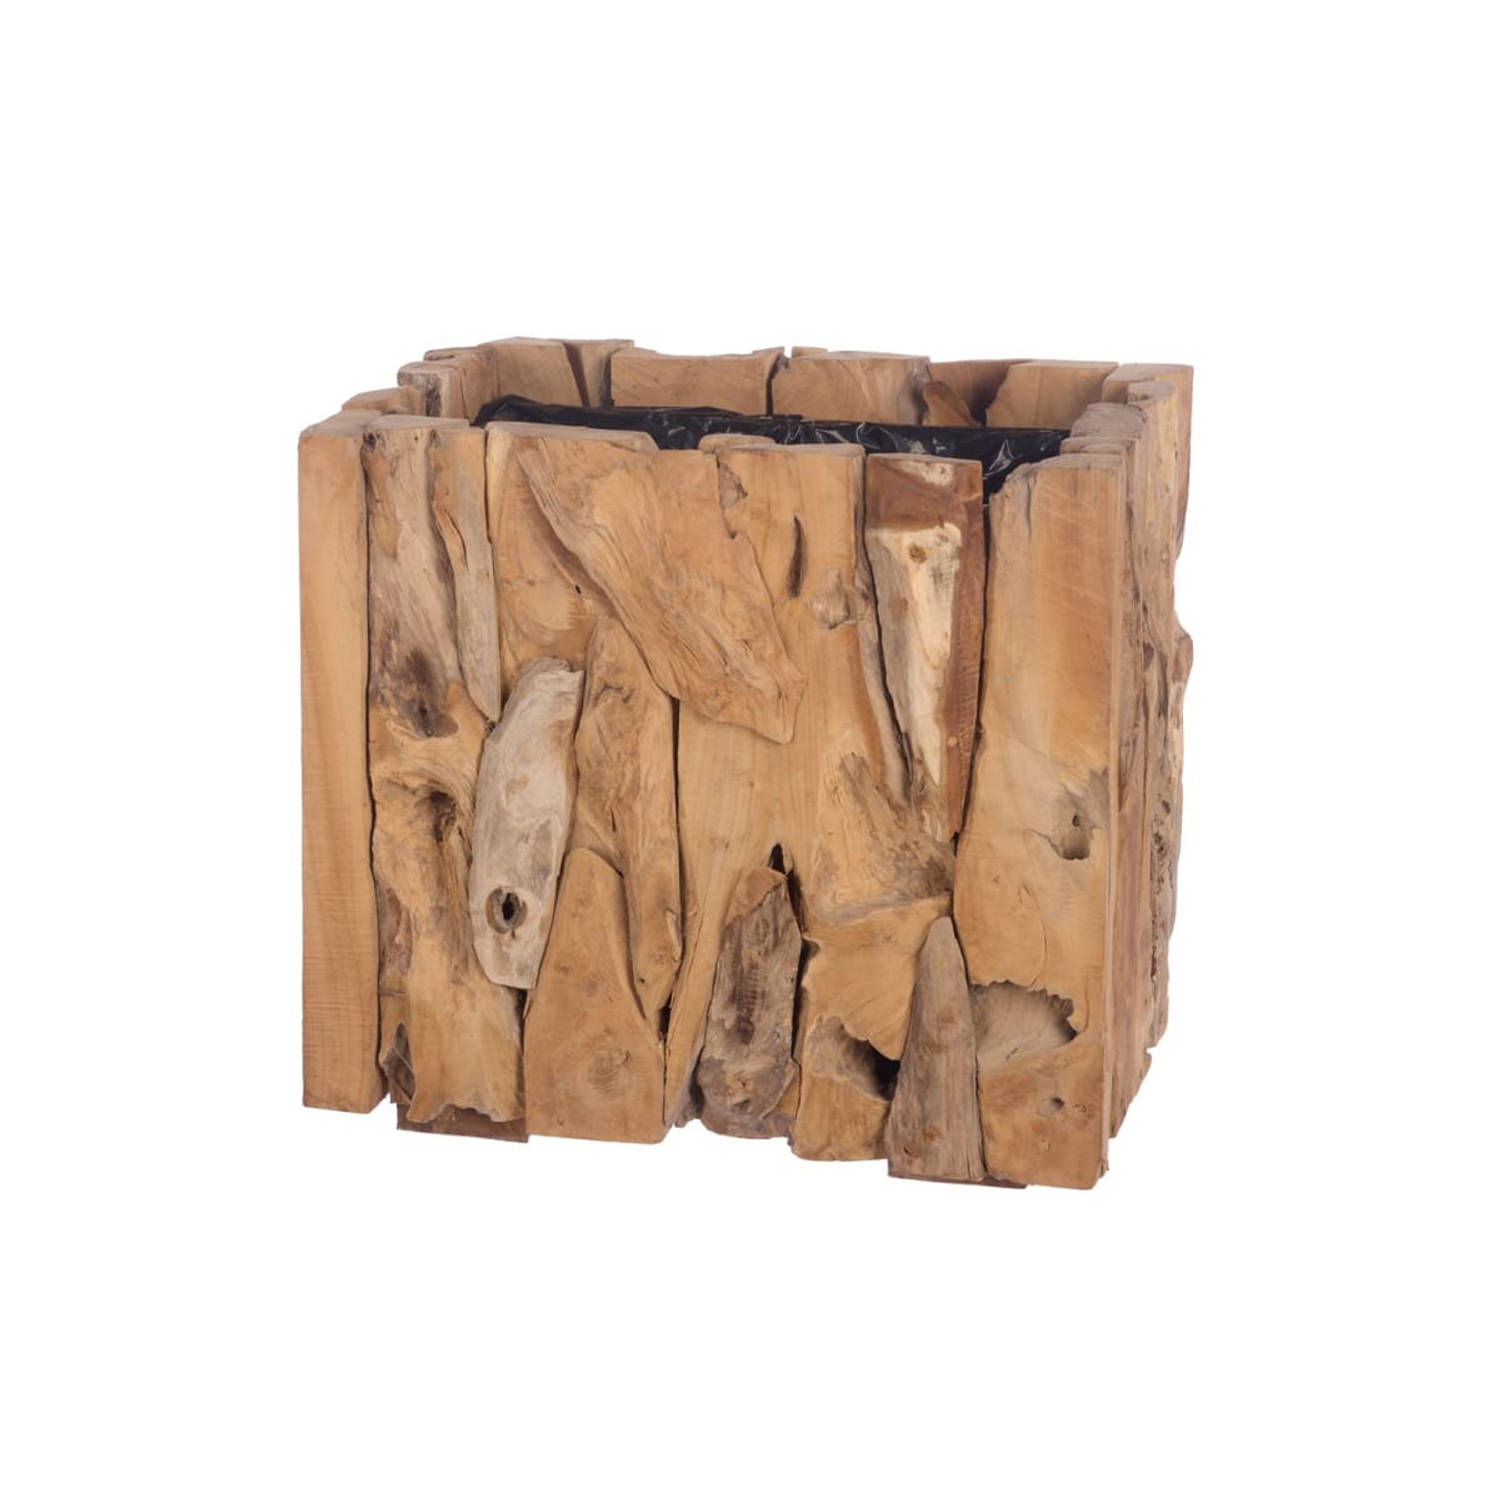 DKNC - Erosie hout box - 38x38x38cm - Natuurlijk